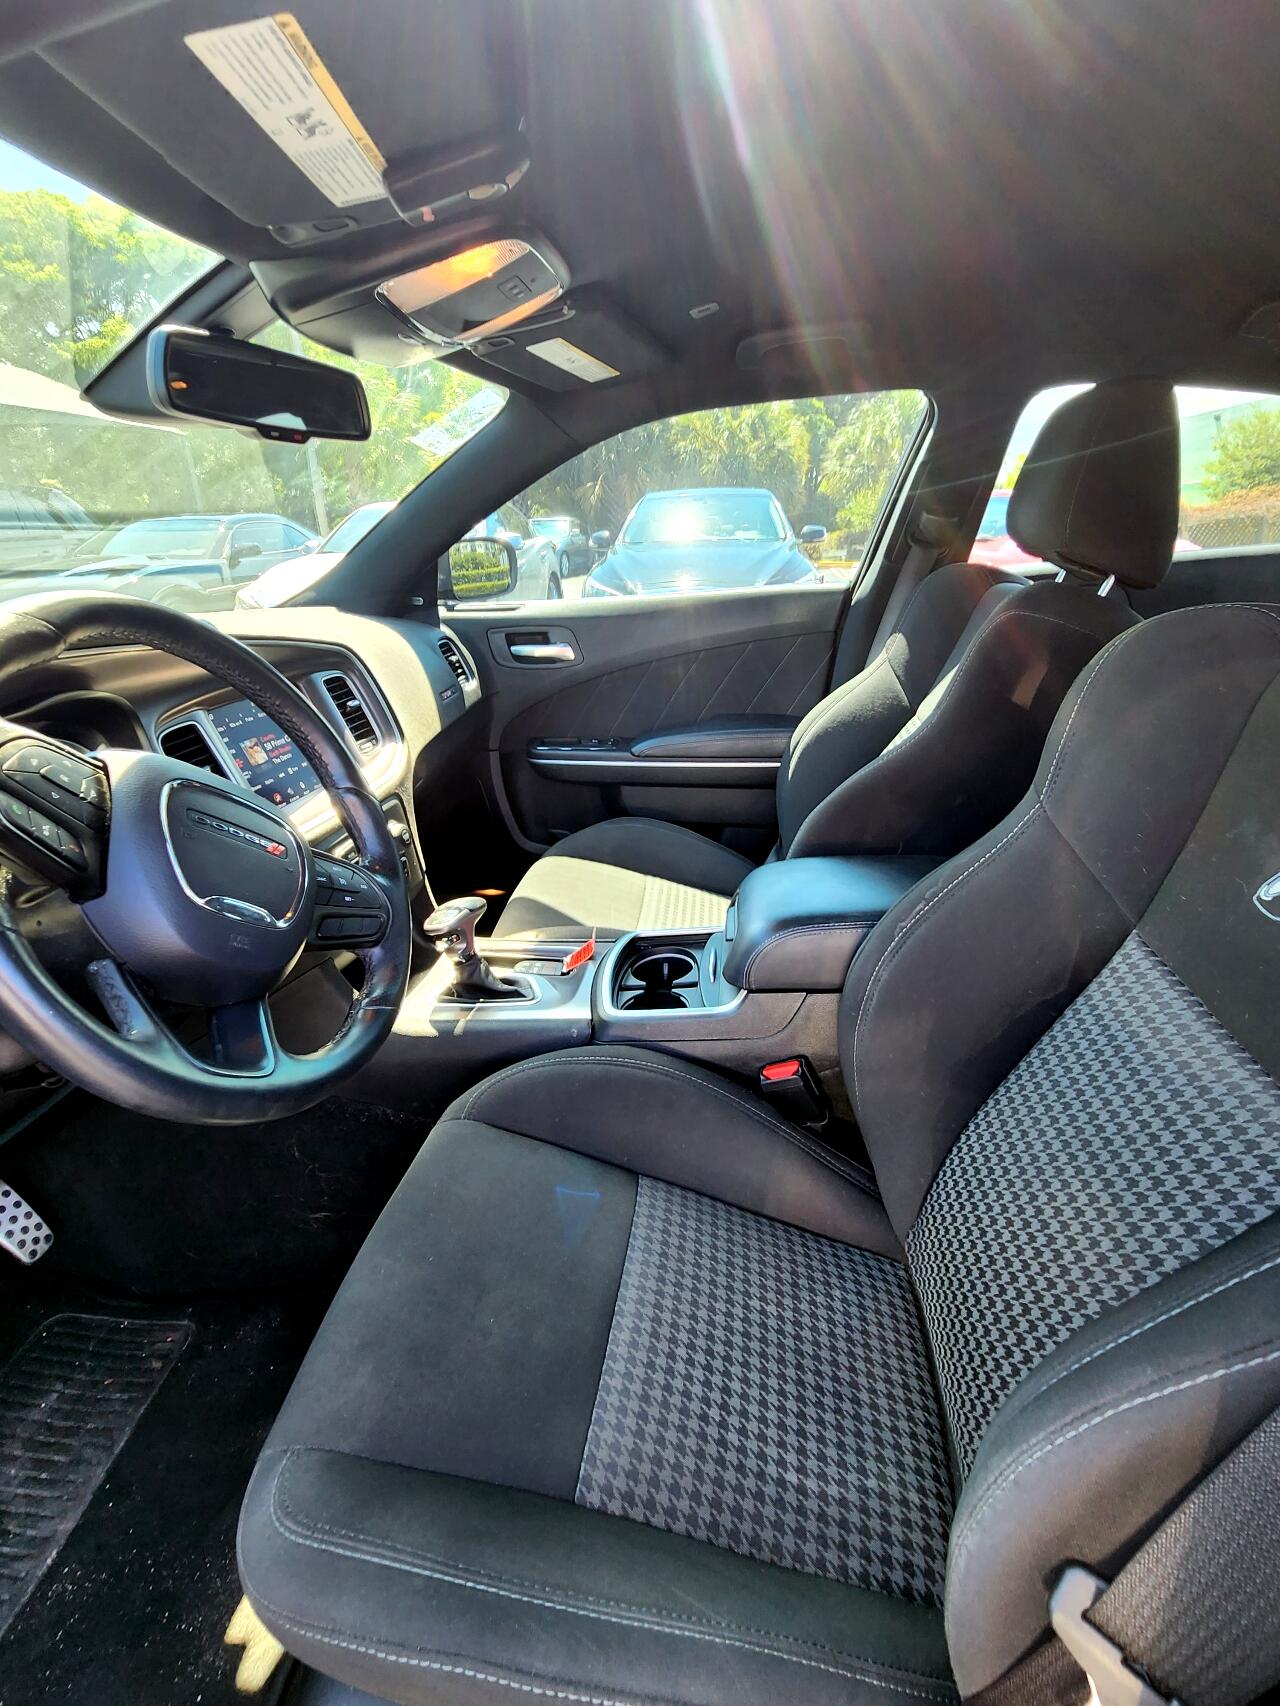 2020 Dodge Charger Sedan - $40,849